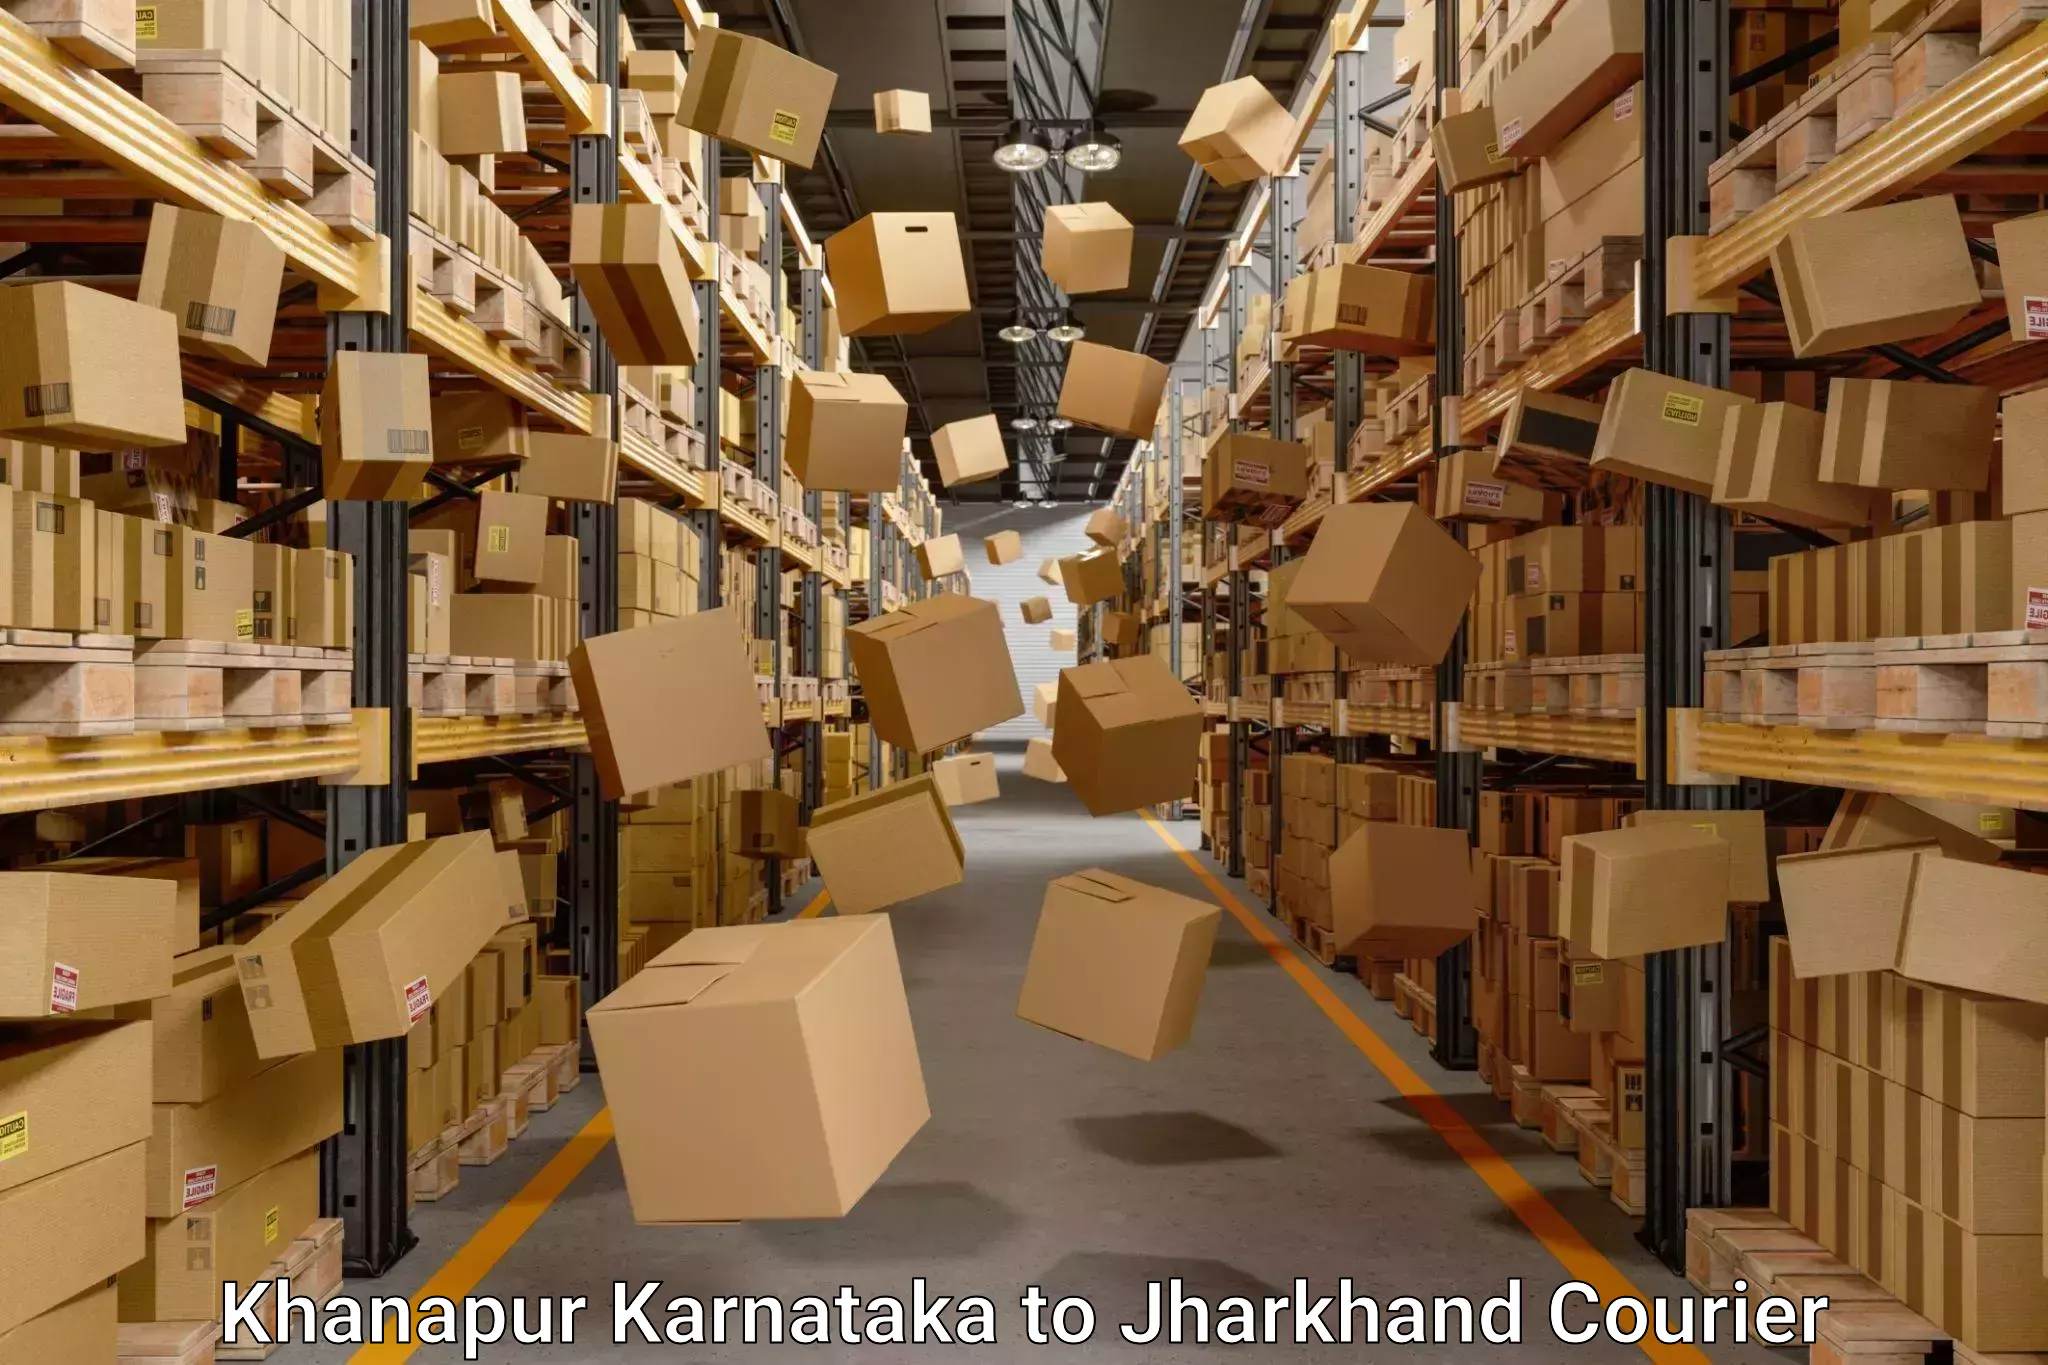 Professional moving company Khanapur Karnataka to Rajmahal